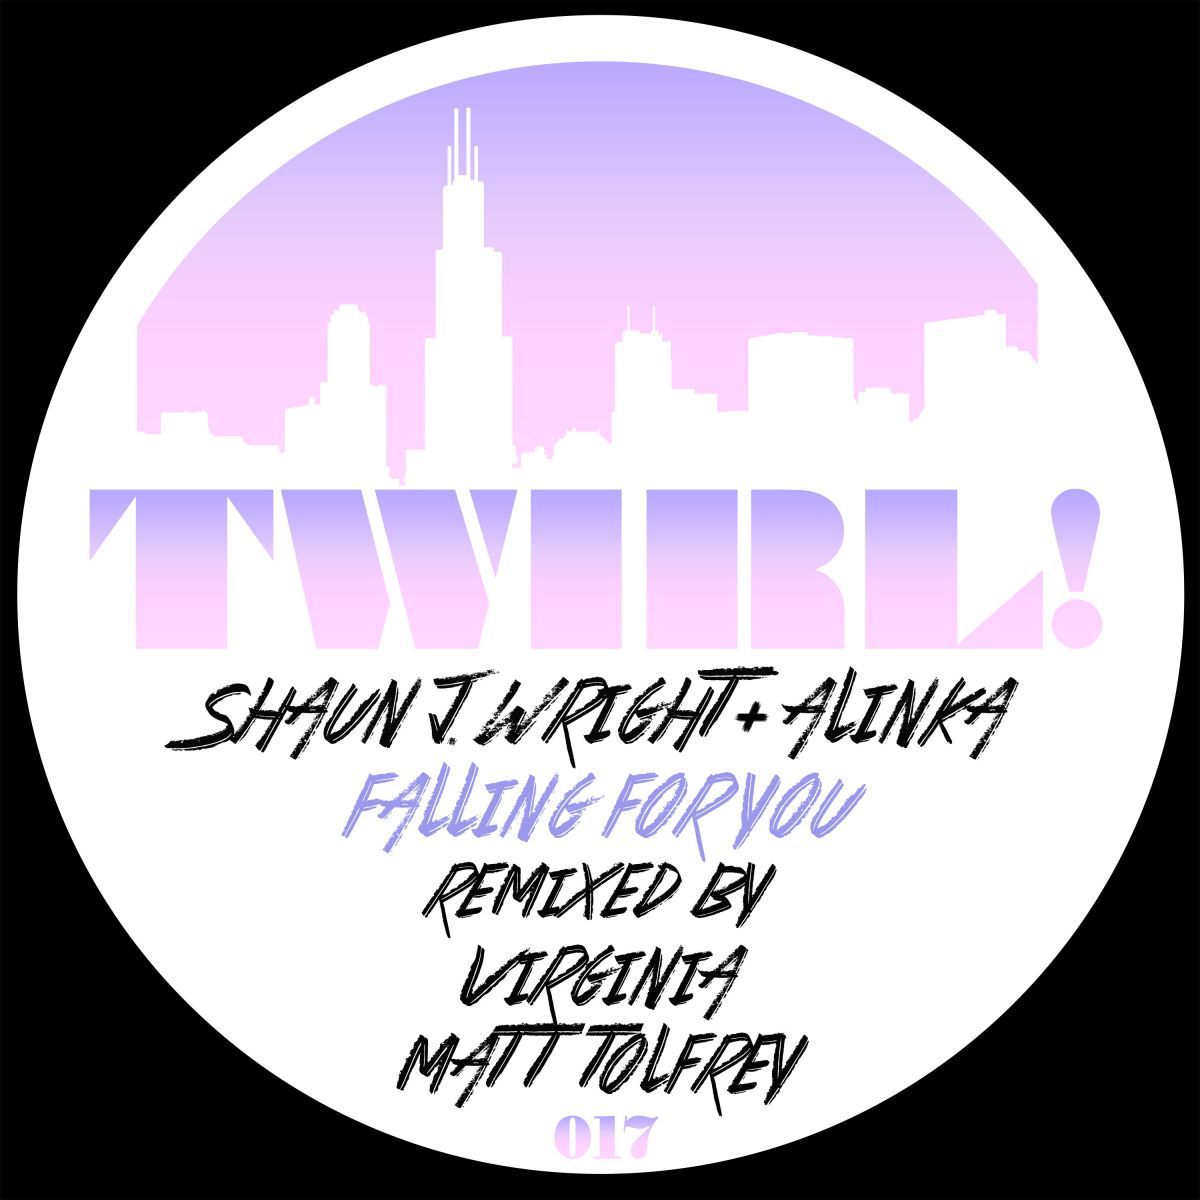 Shaun J. Wright & Alinka - Falling For You / Twirl Recordings